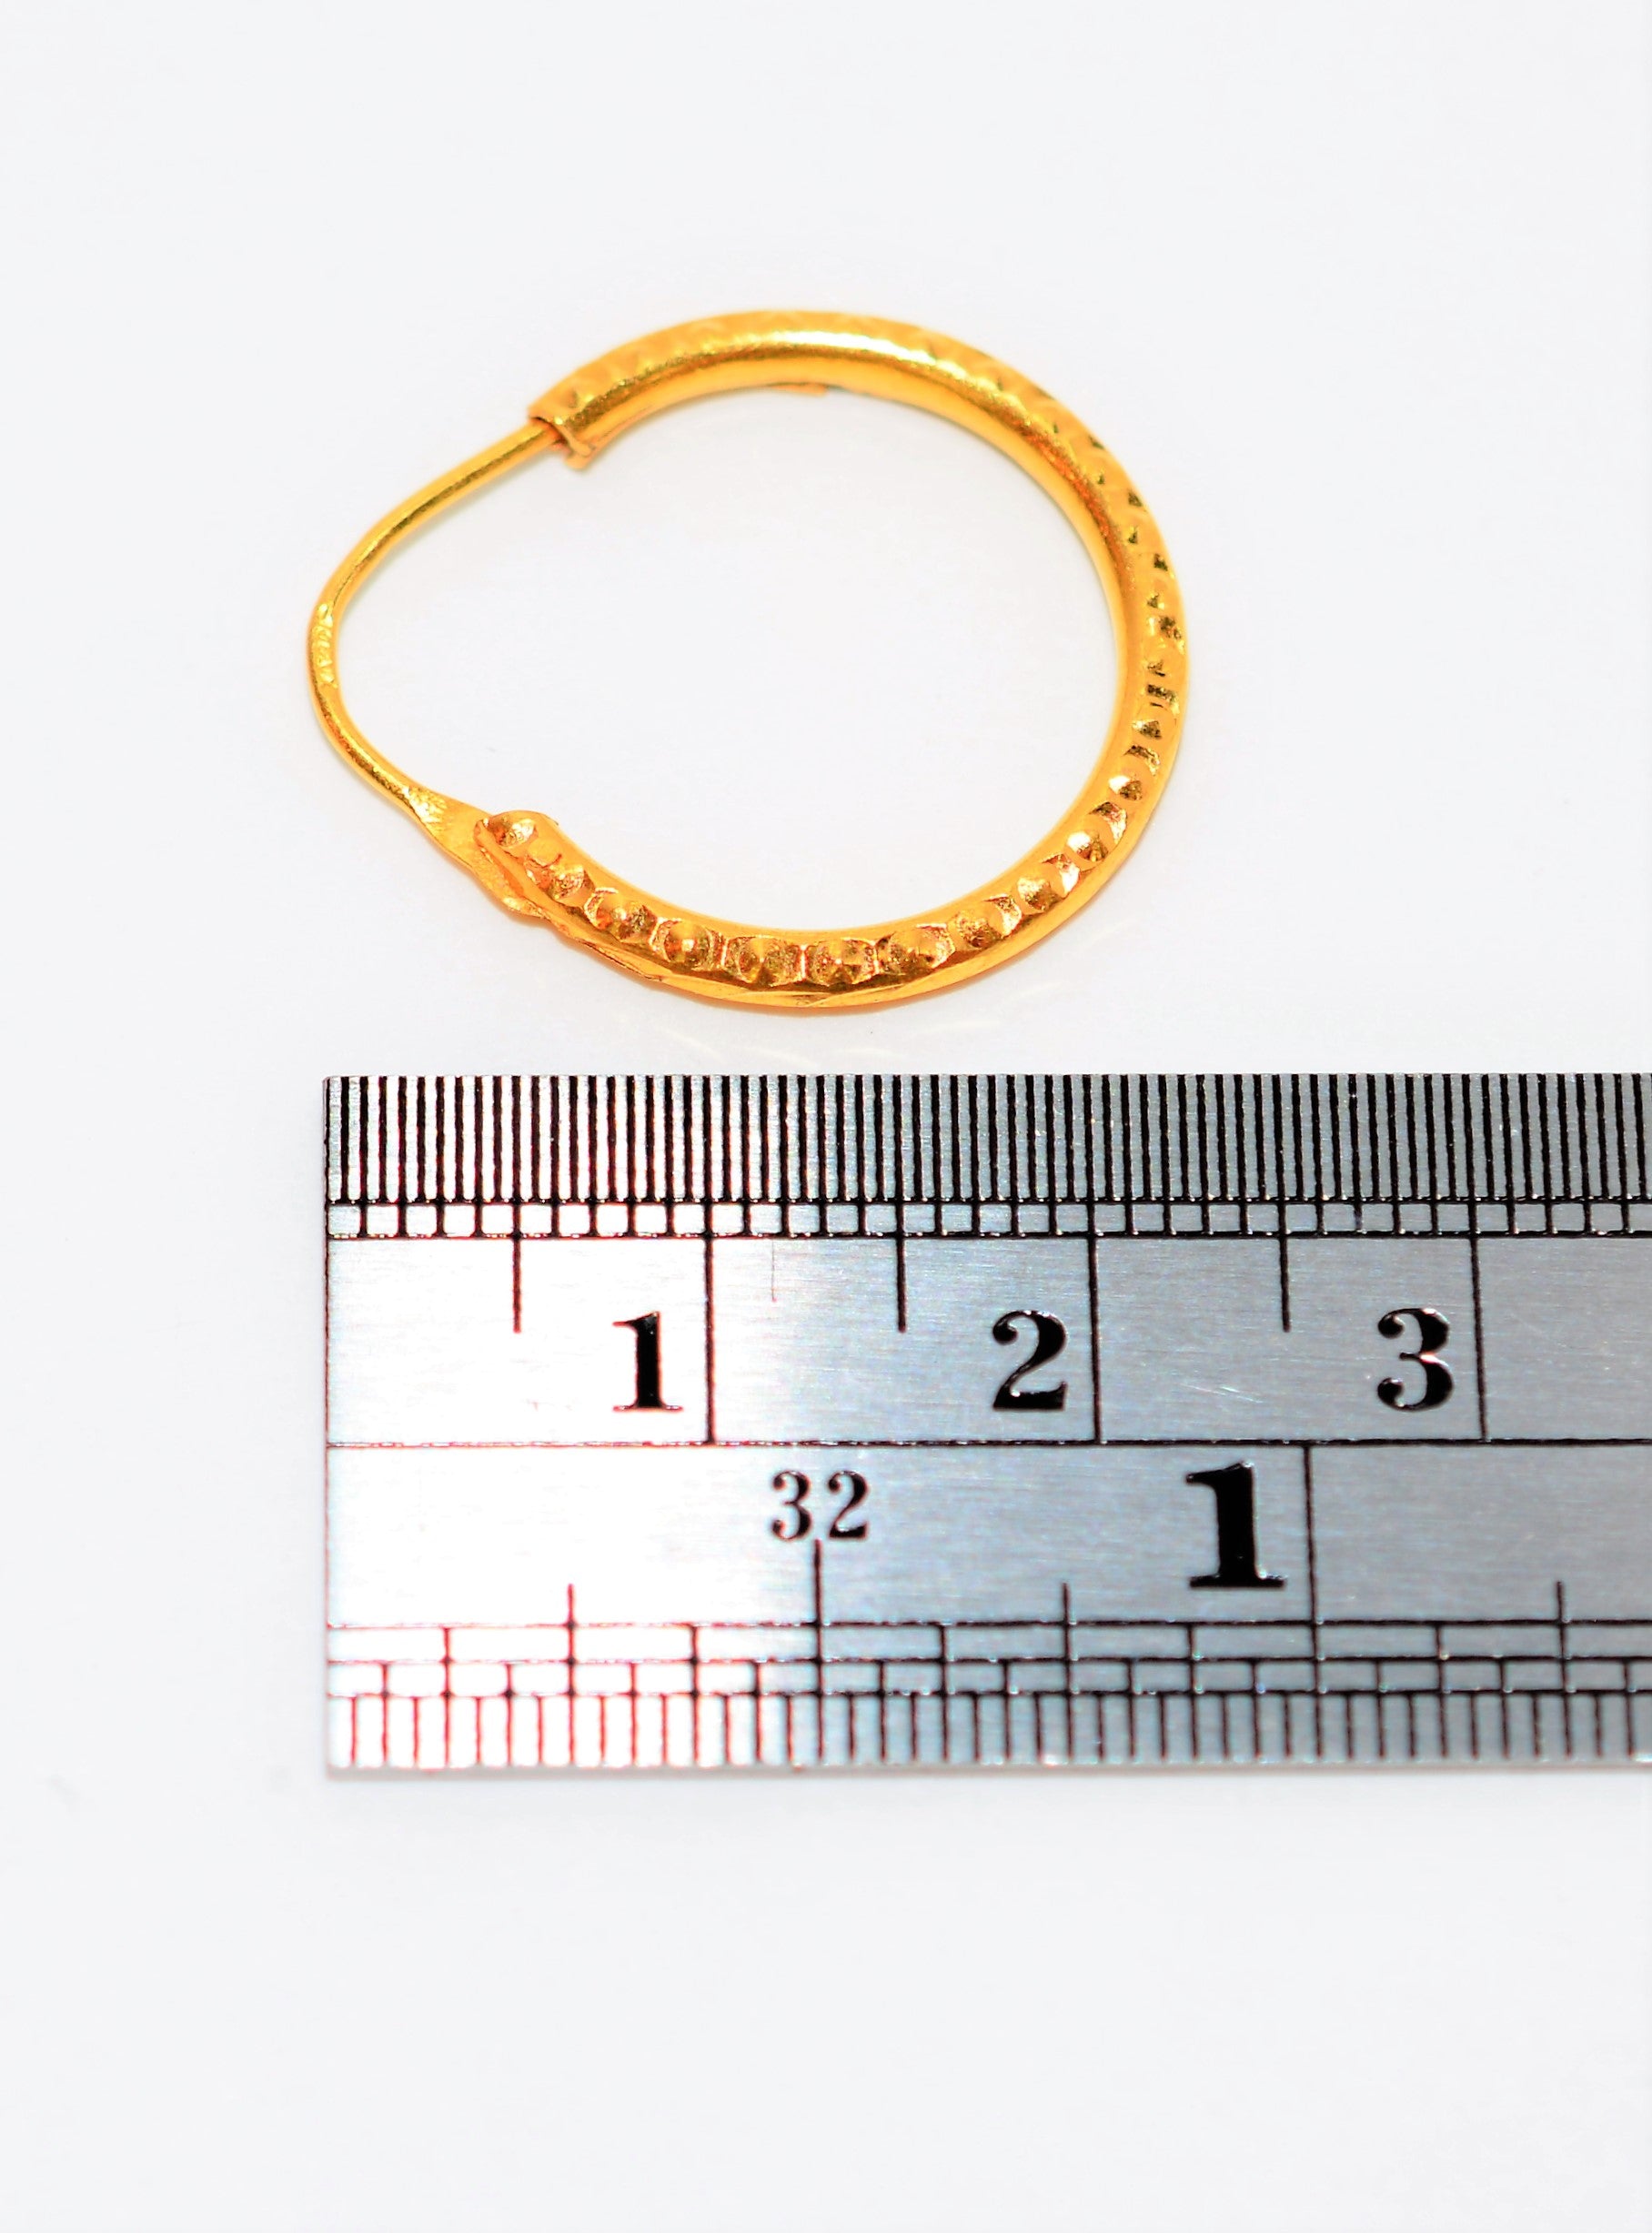 22k 22ct Gold Earrings Stud Indian Handmade 22kt Fine Gold Women Earrings  OS1439 | eBay